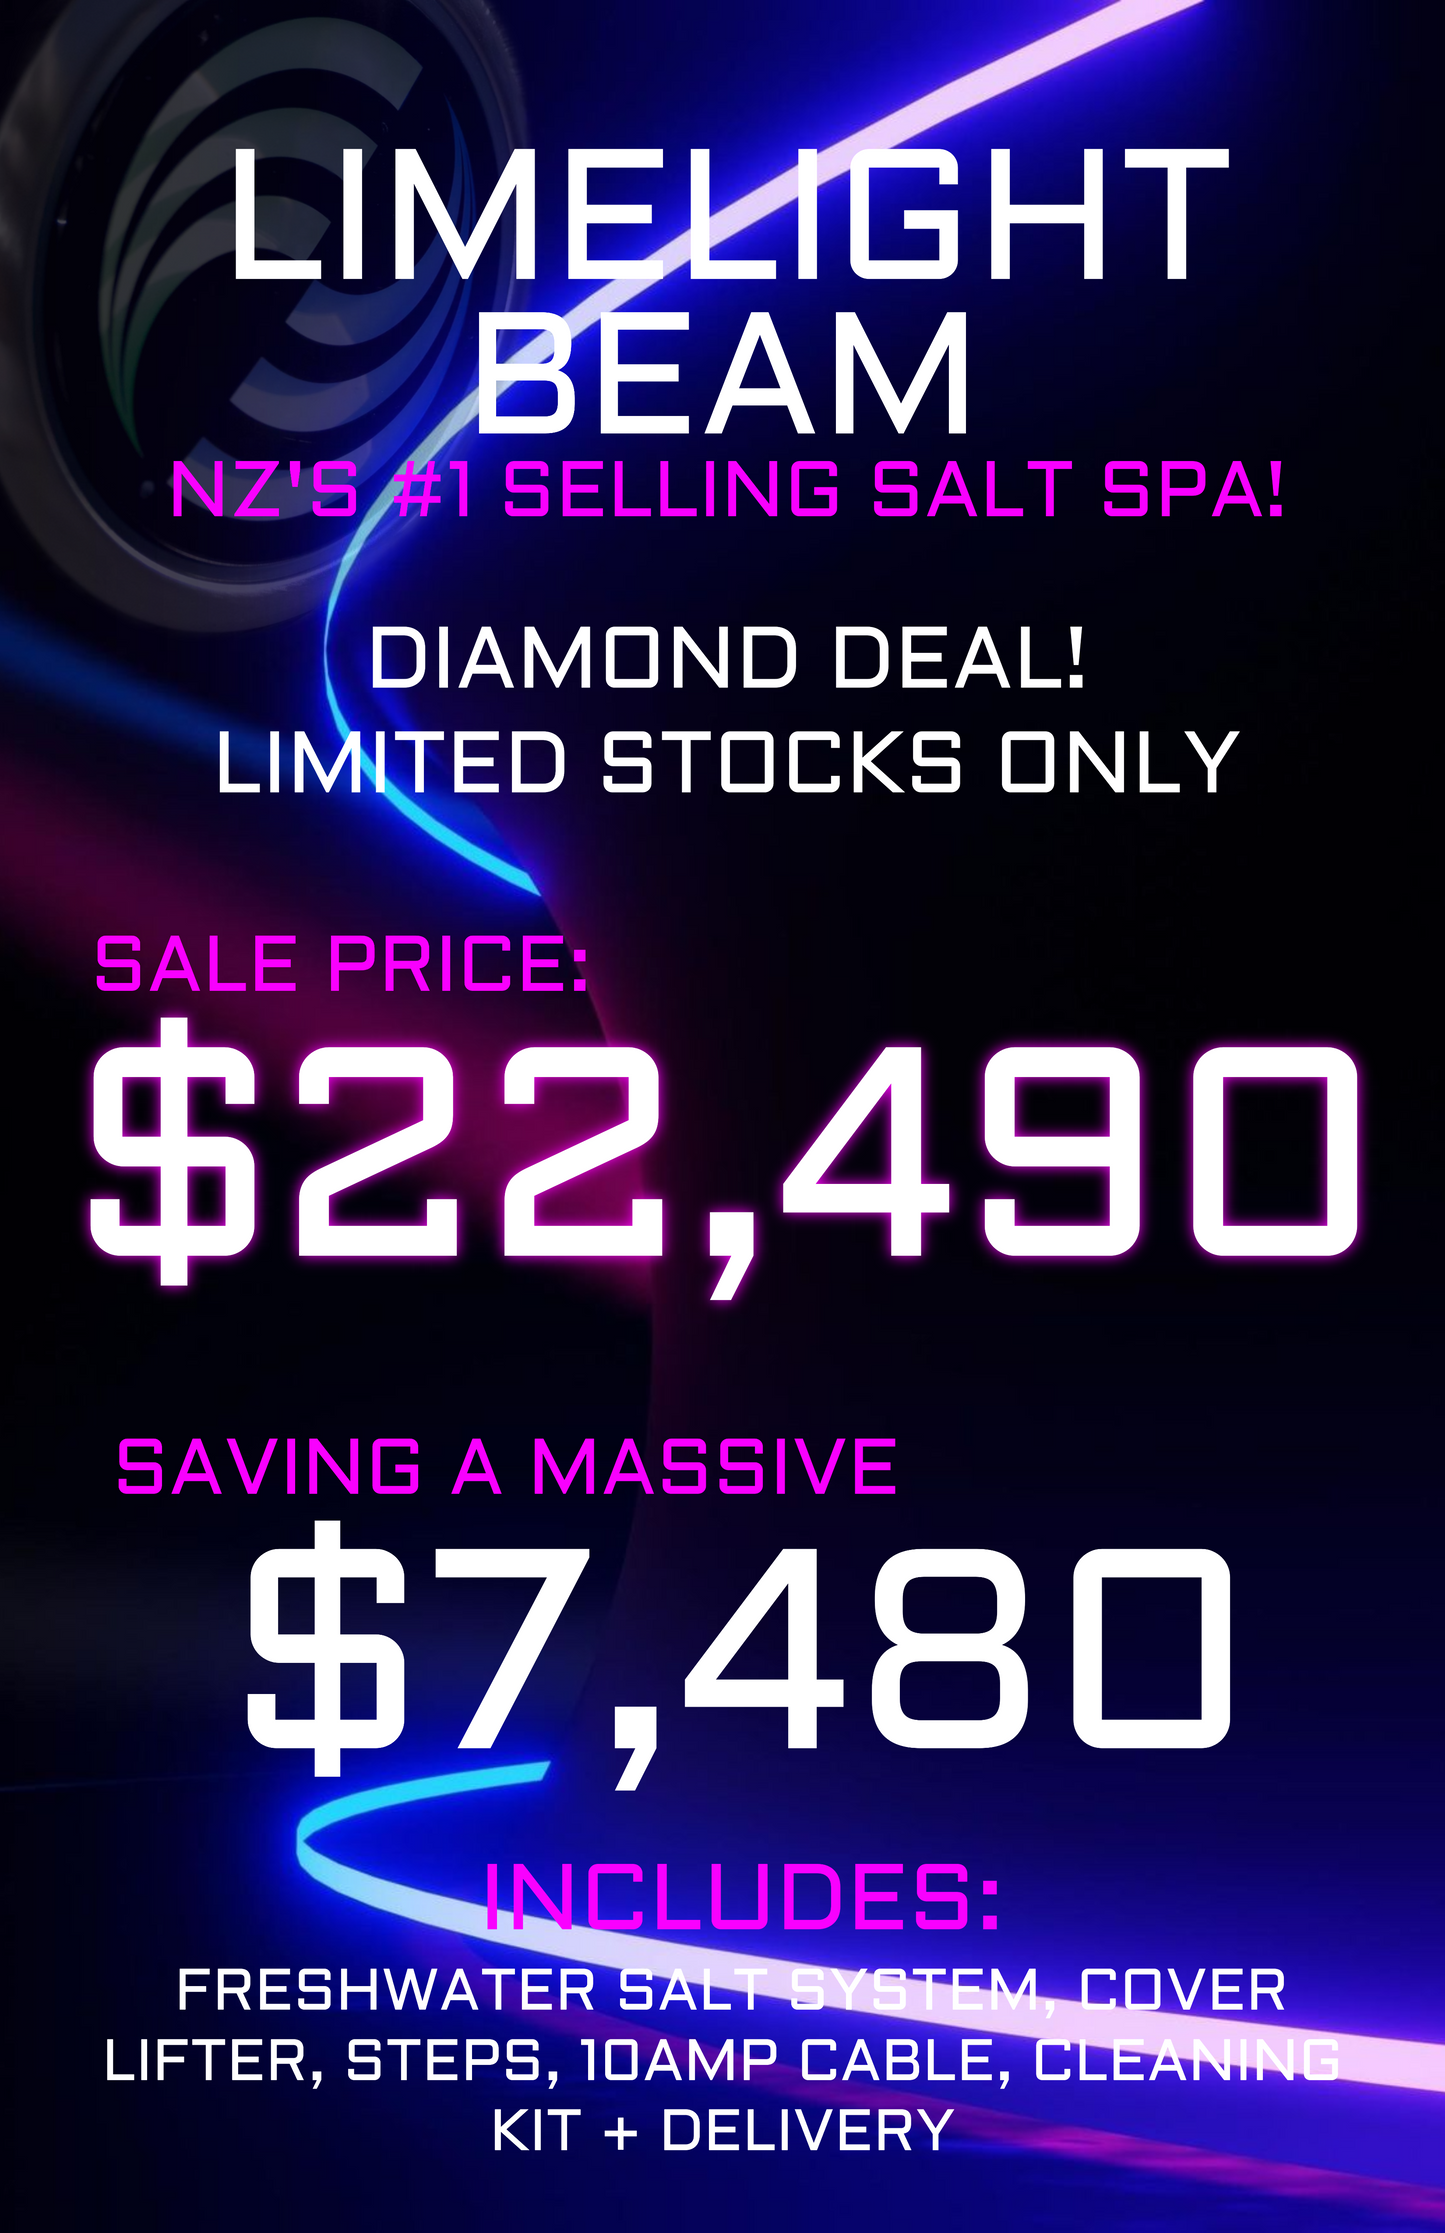 Limelight Beam #1 Selling Salt Spa in NZ!